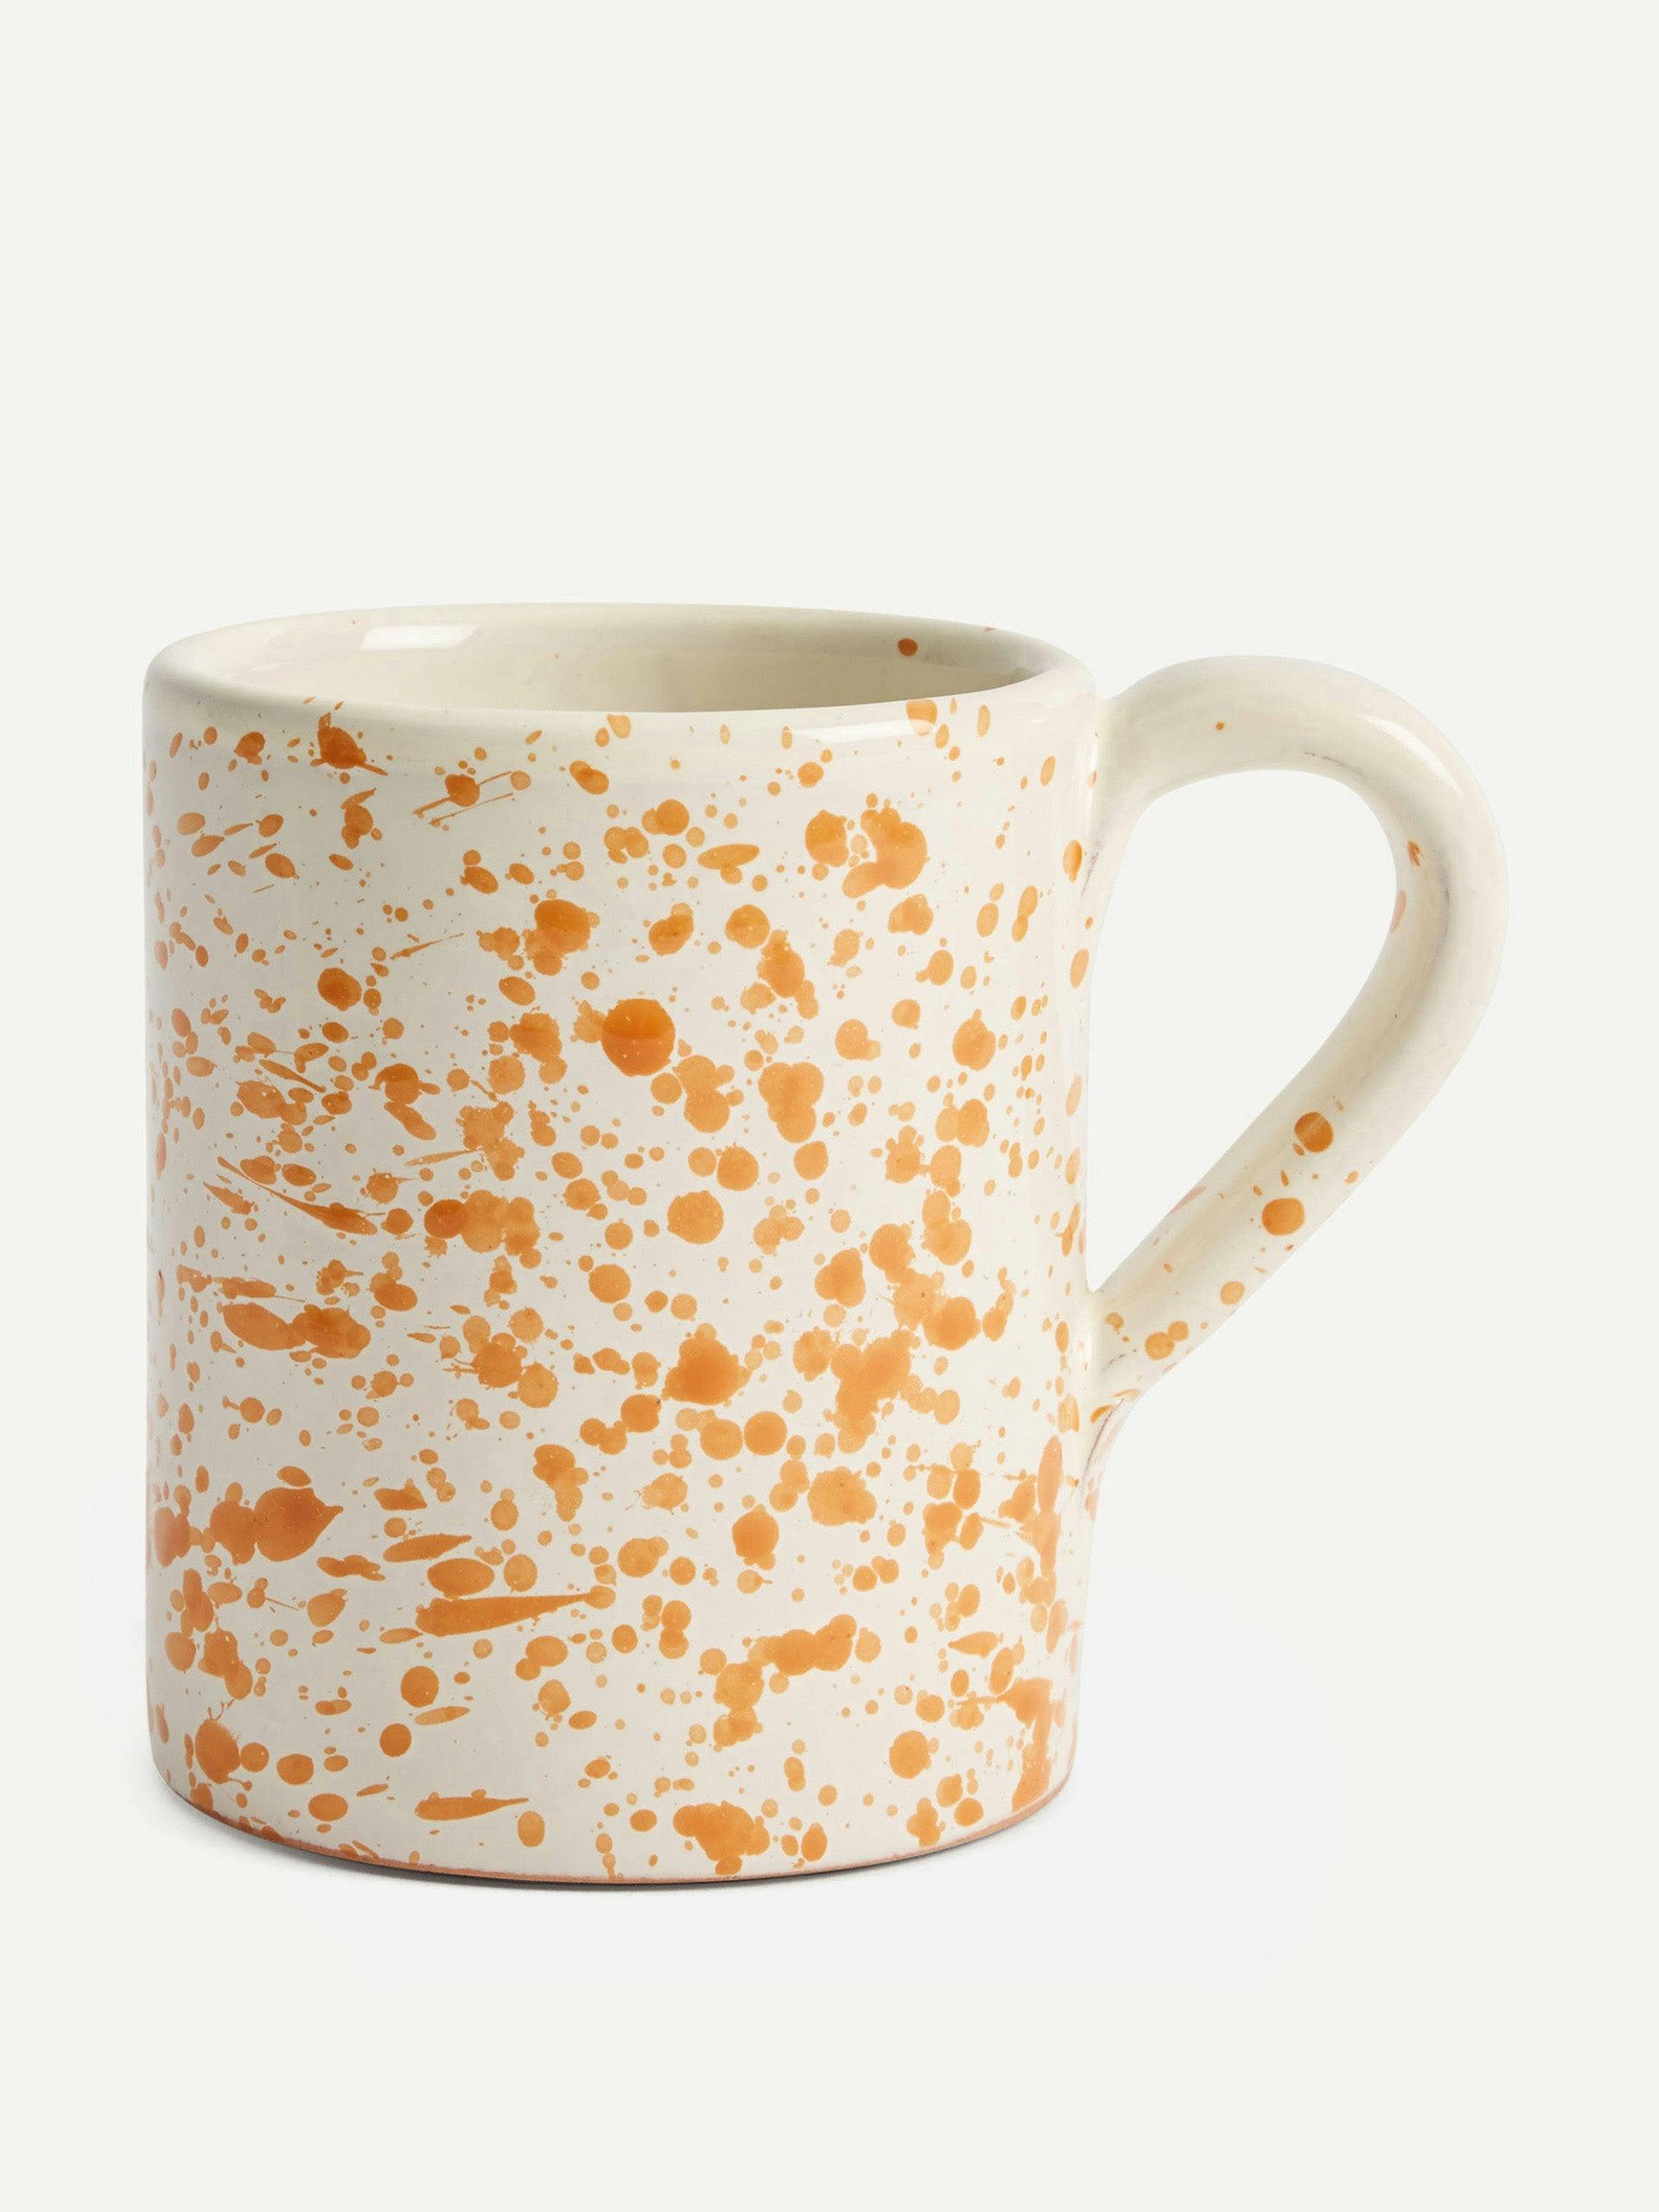 Coffee mug in Burnt Orange